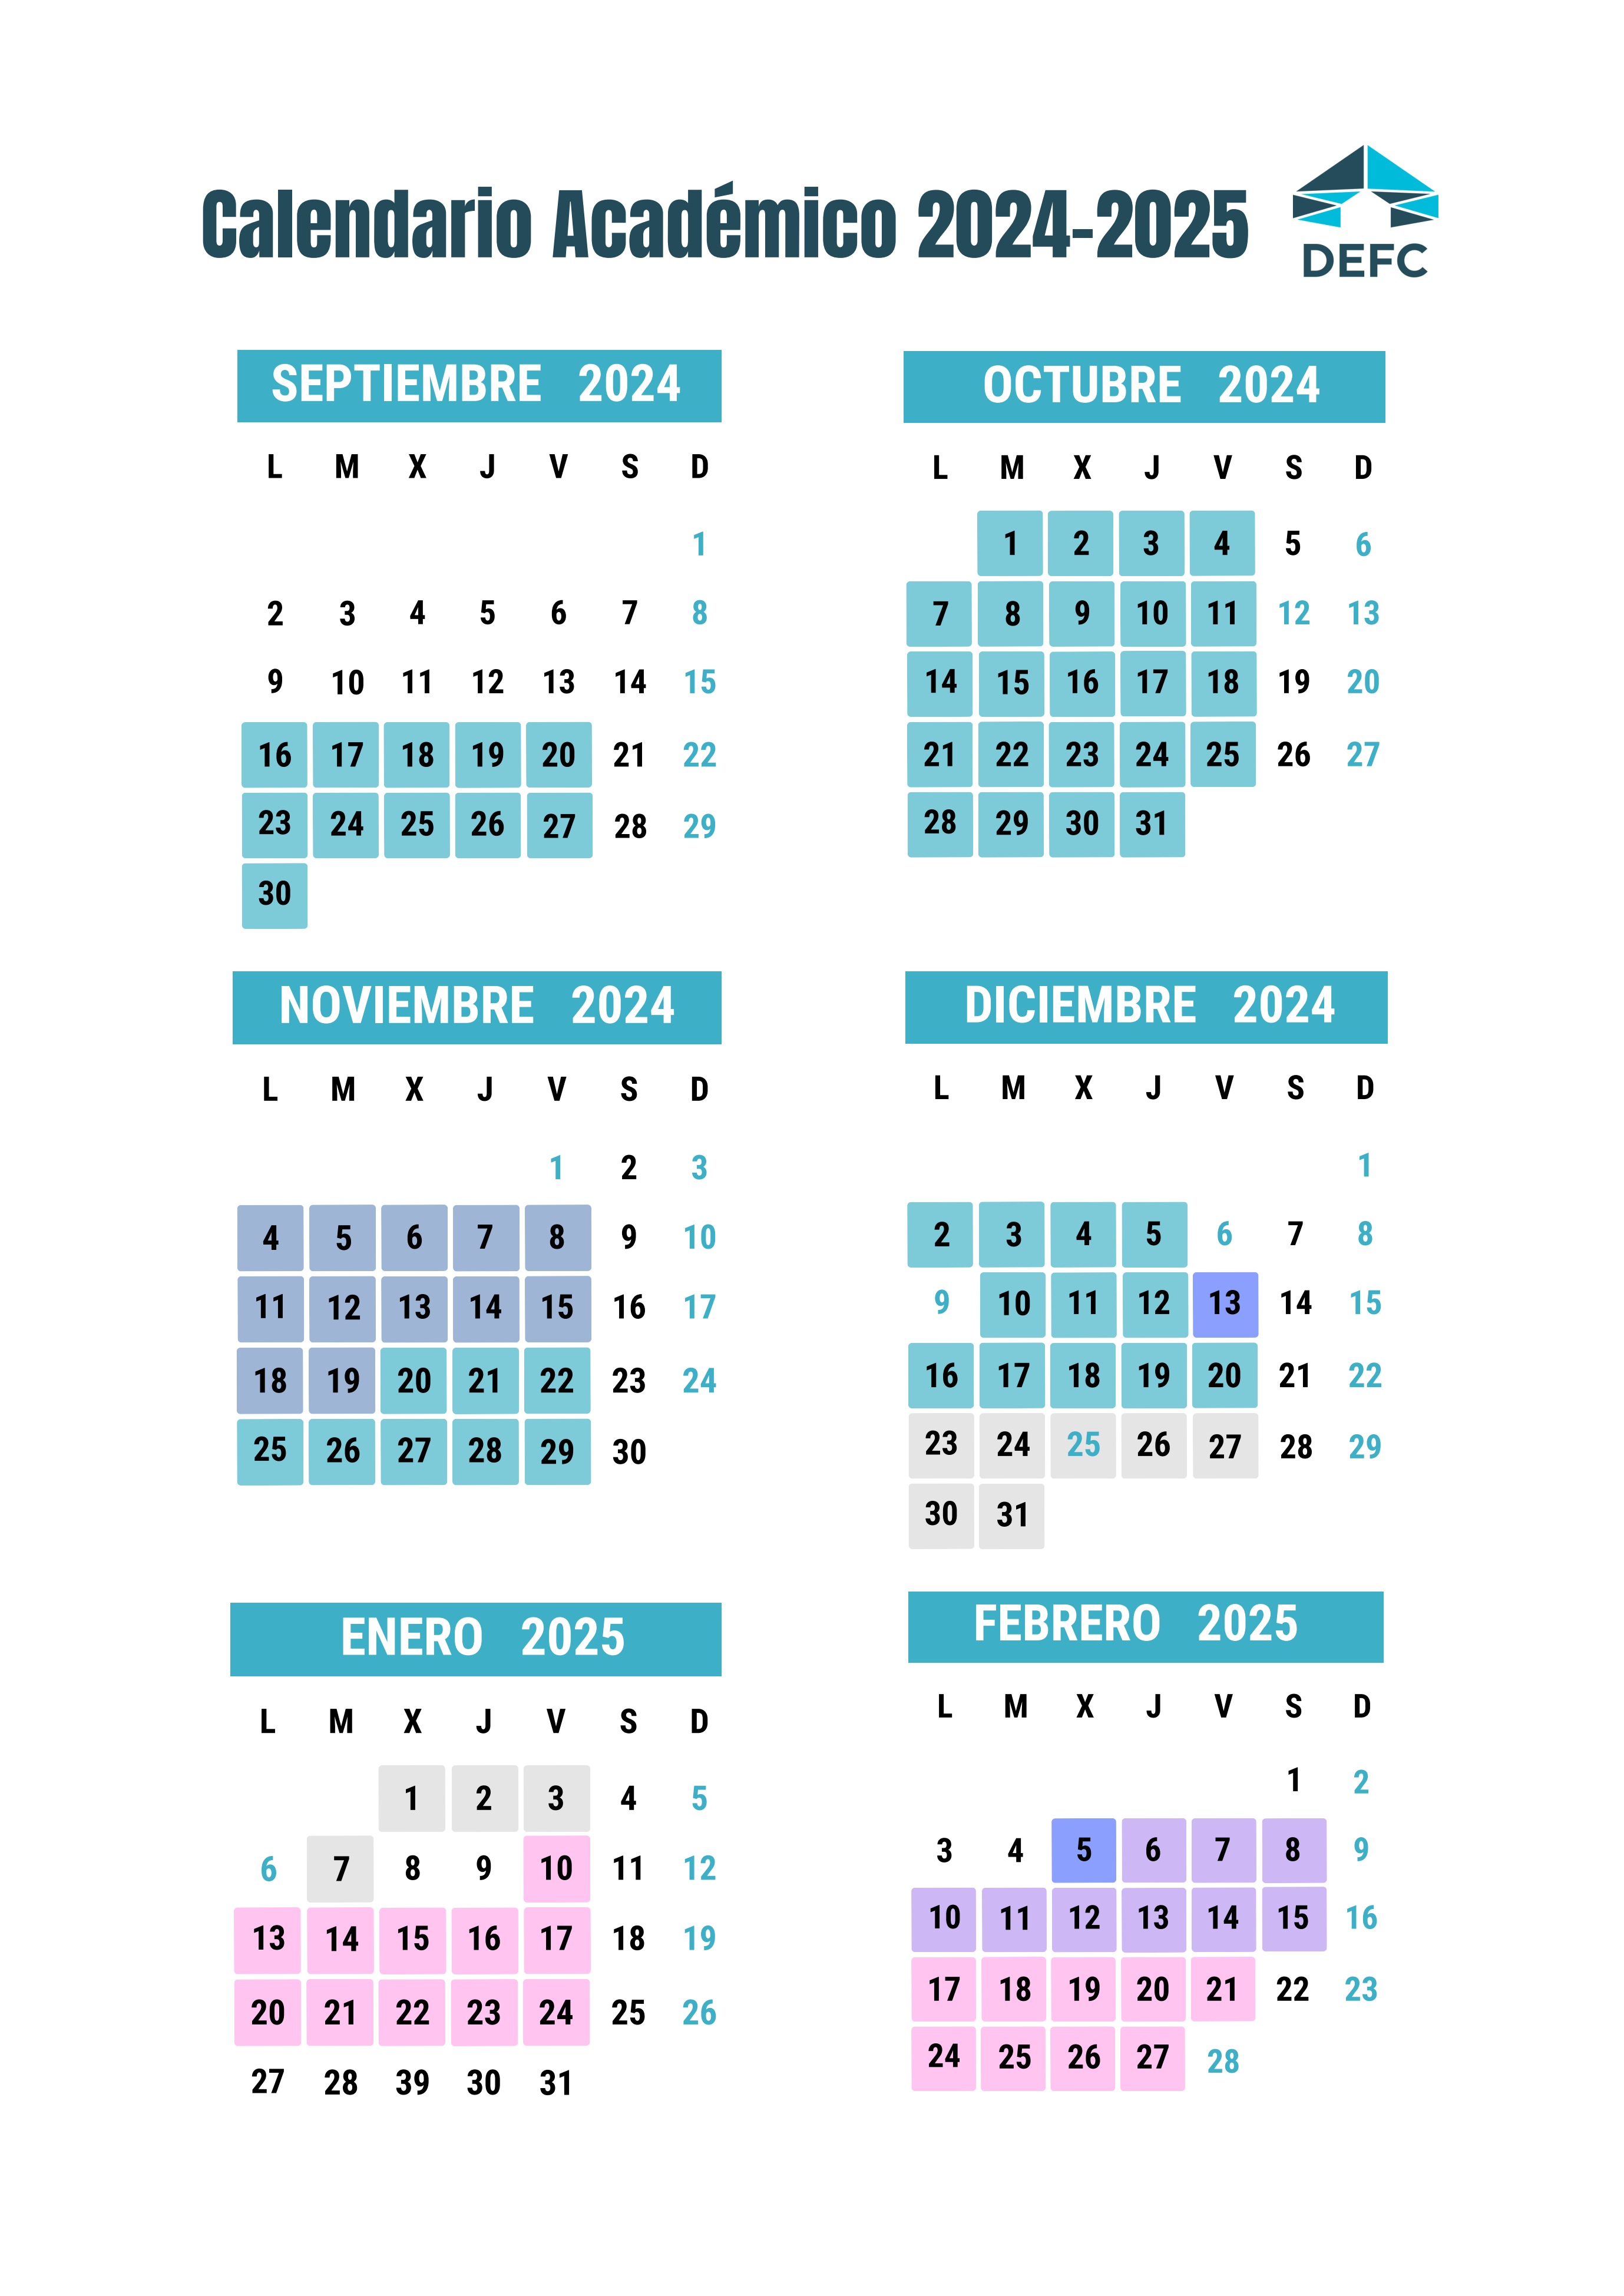 Captura del calendario donde se ve los meses de septembre a febrero